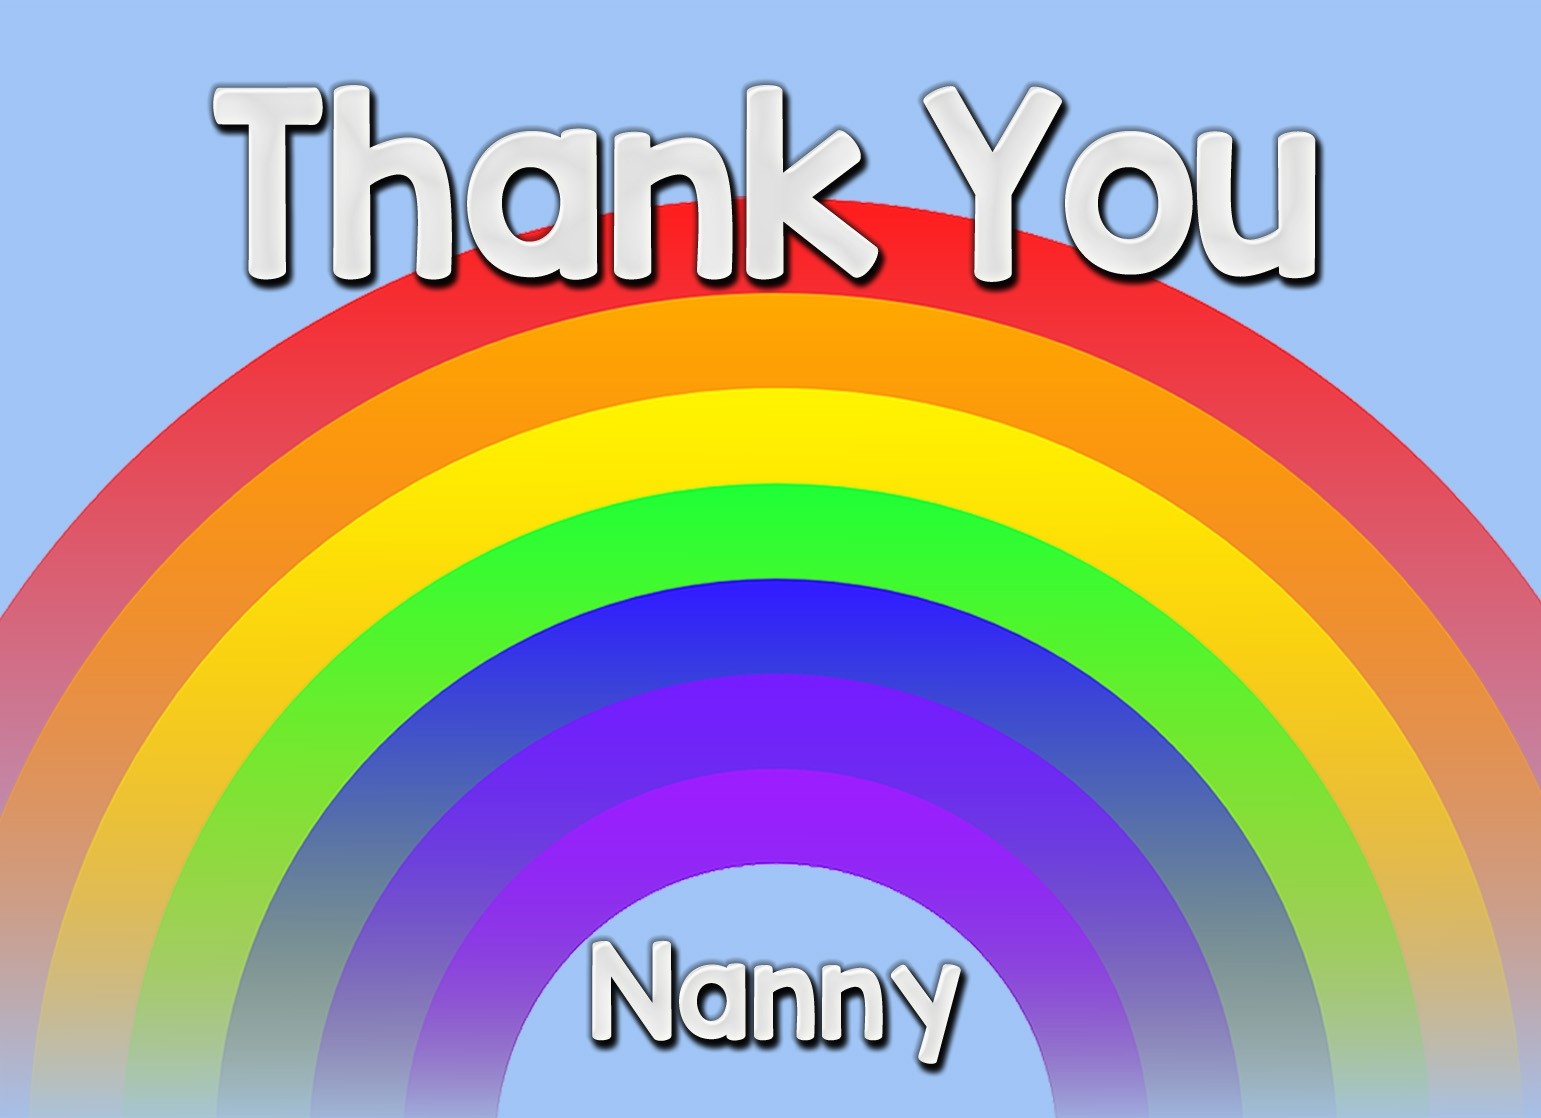 Thank You 'Nanny' Rainbow Greeting Card